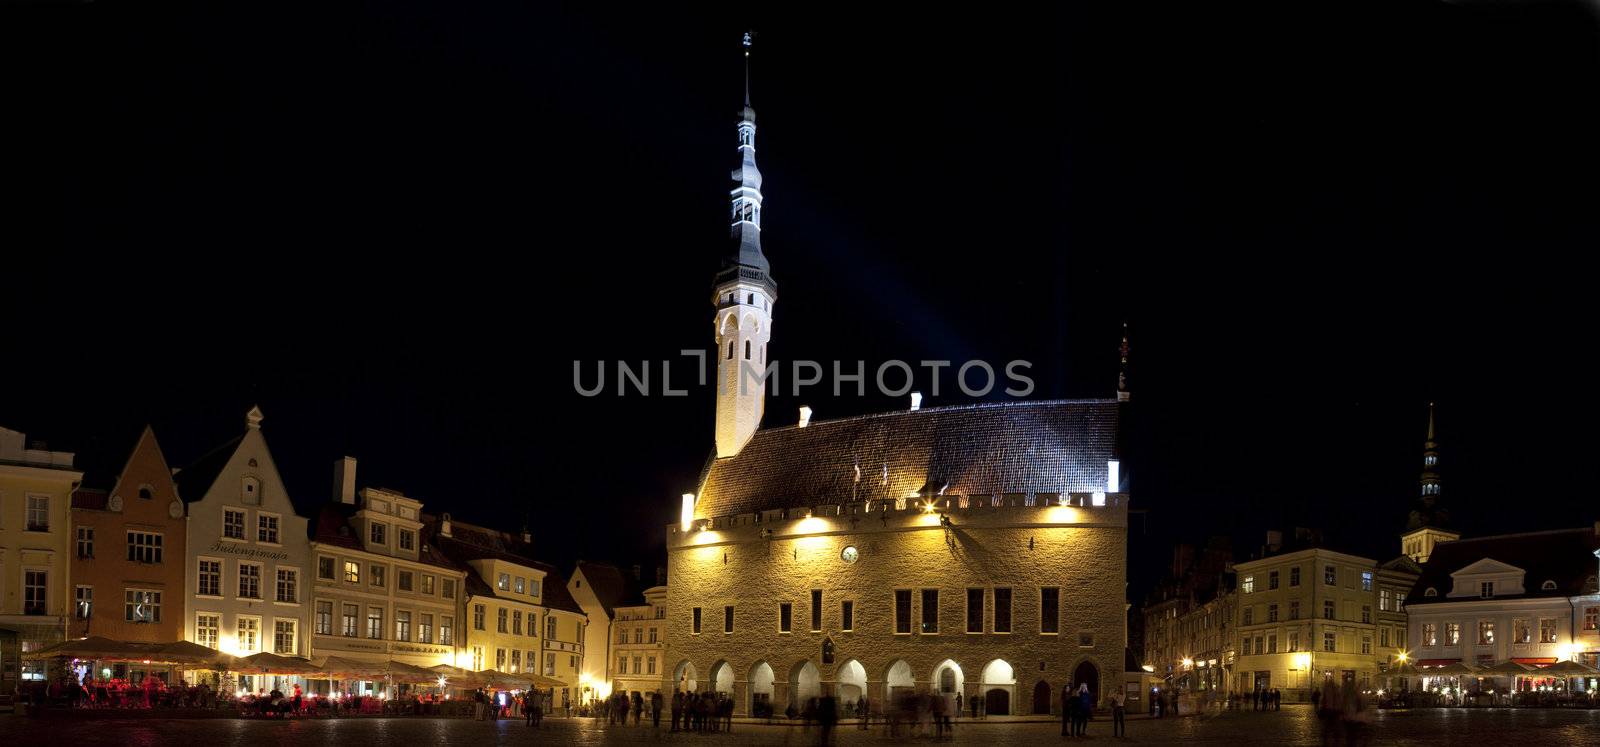 Tallin Town Hall Square at Night, Estonia by chrisdorney